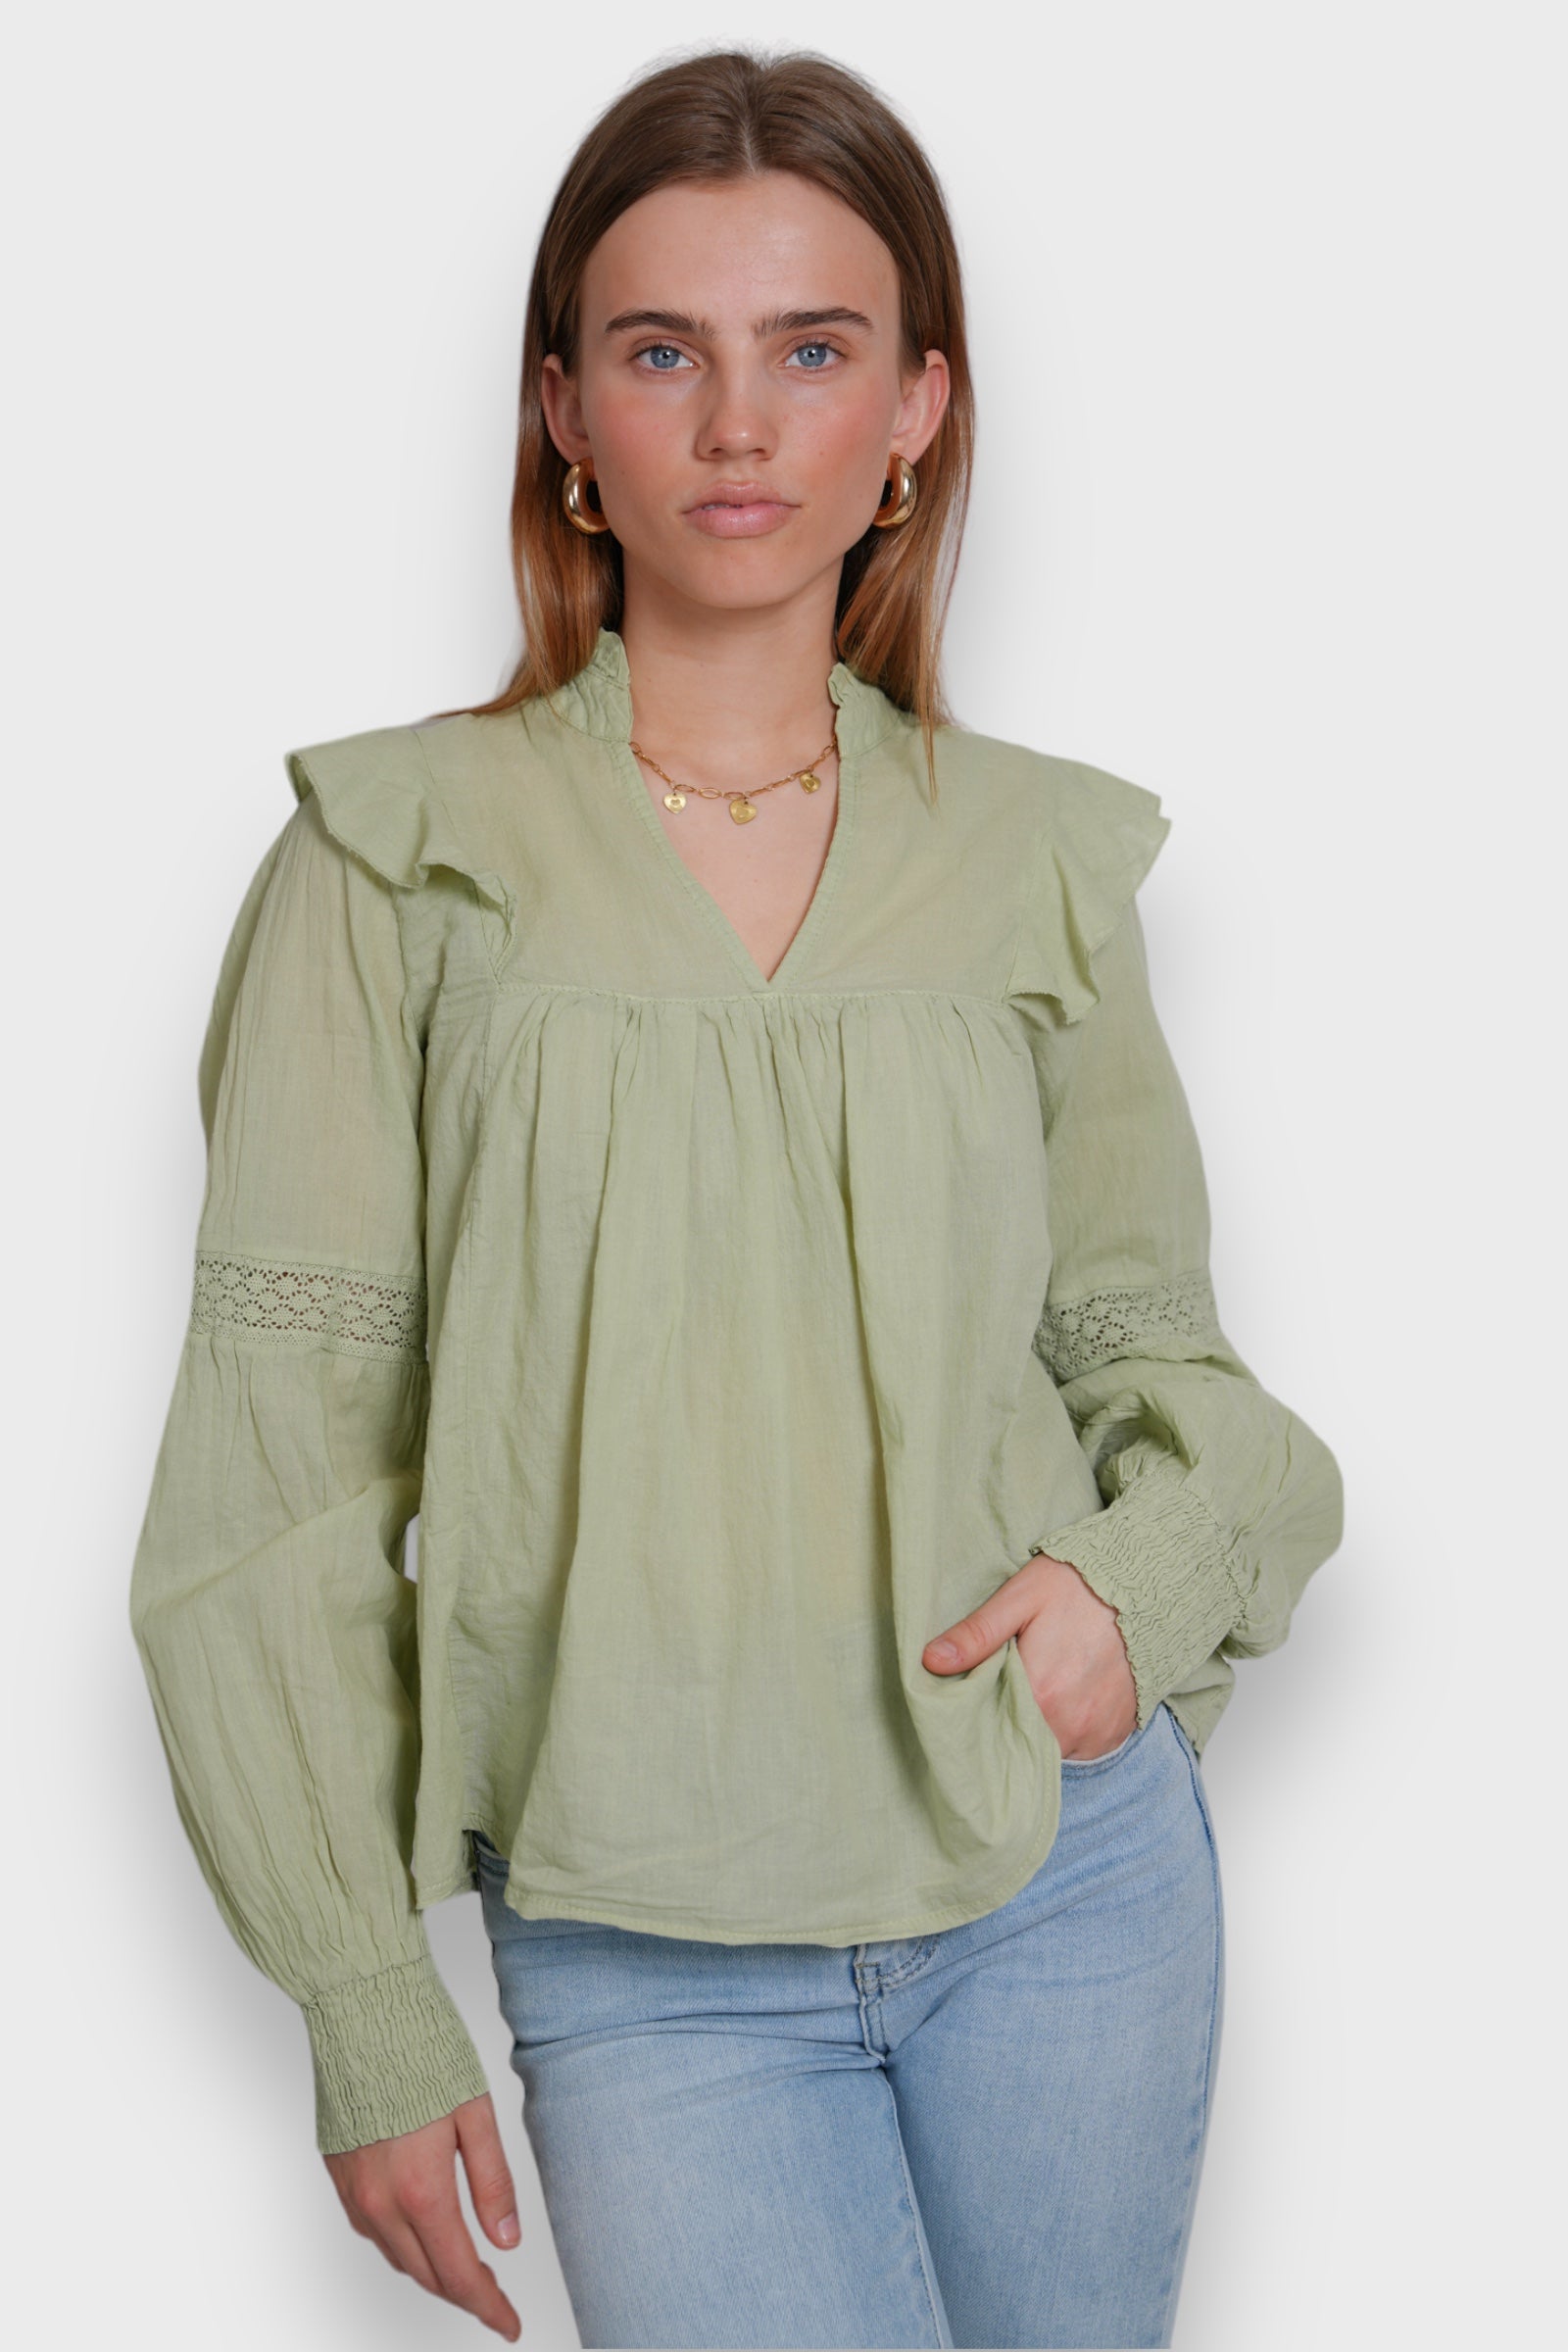 "Glory" blouse sage green